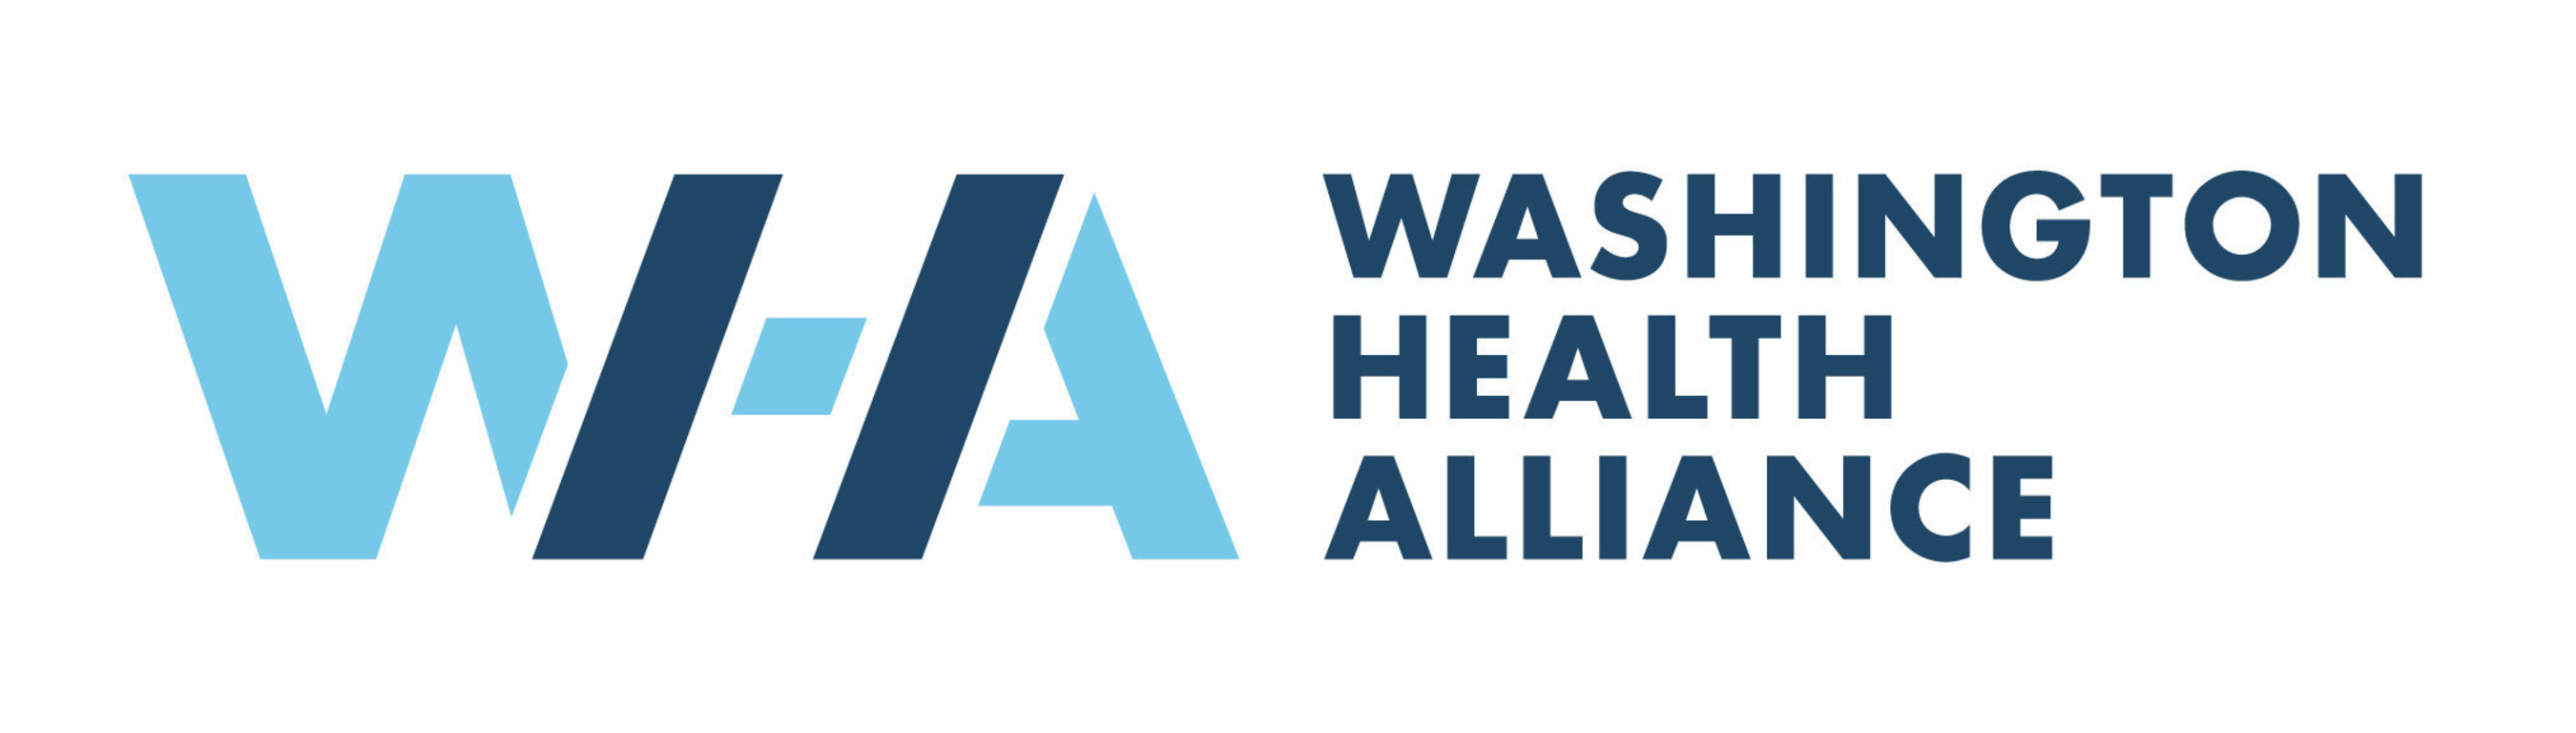 Washington Health Alliance